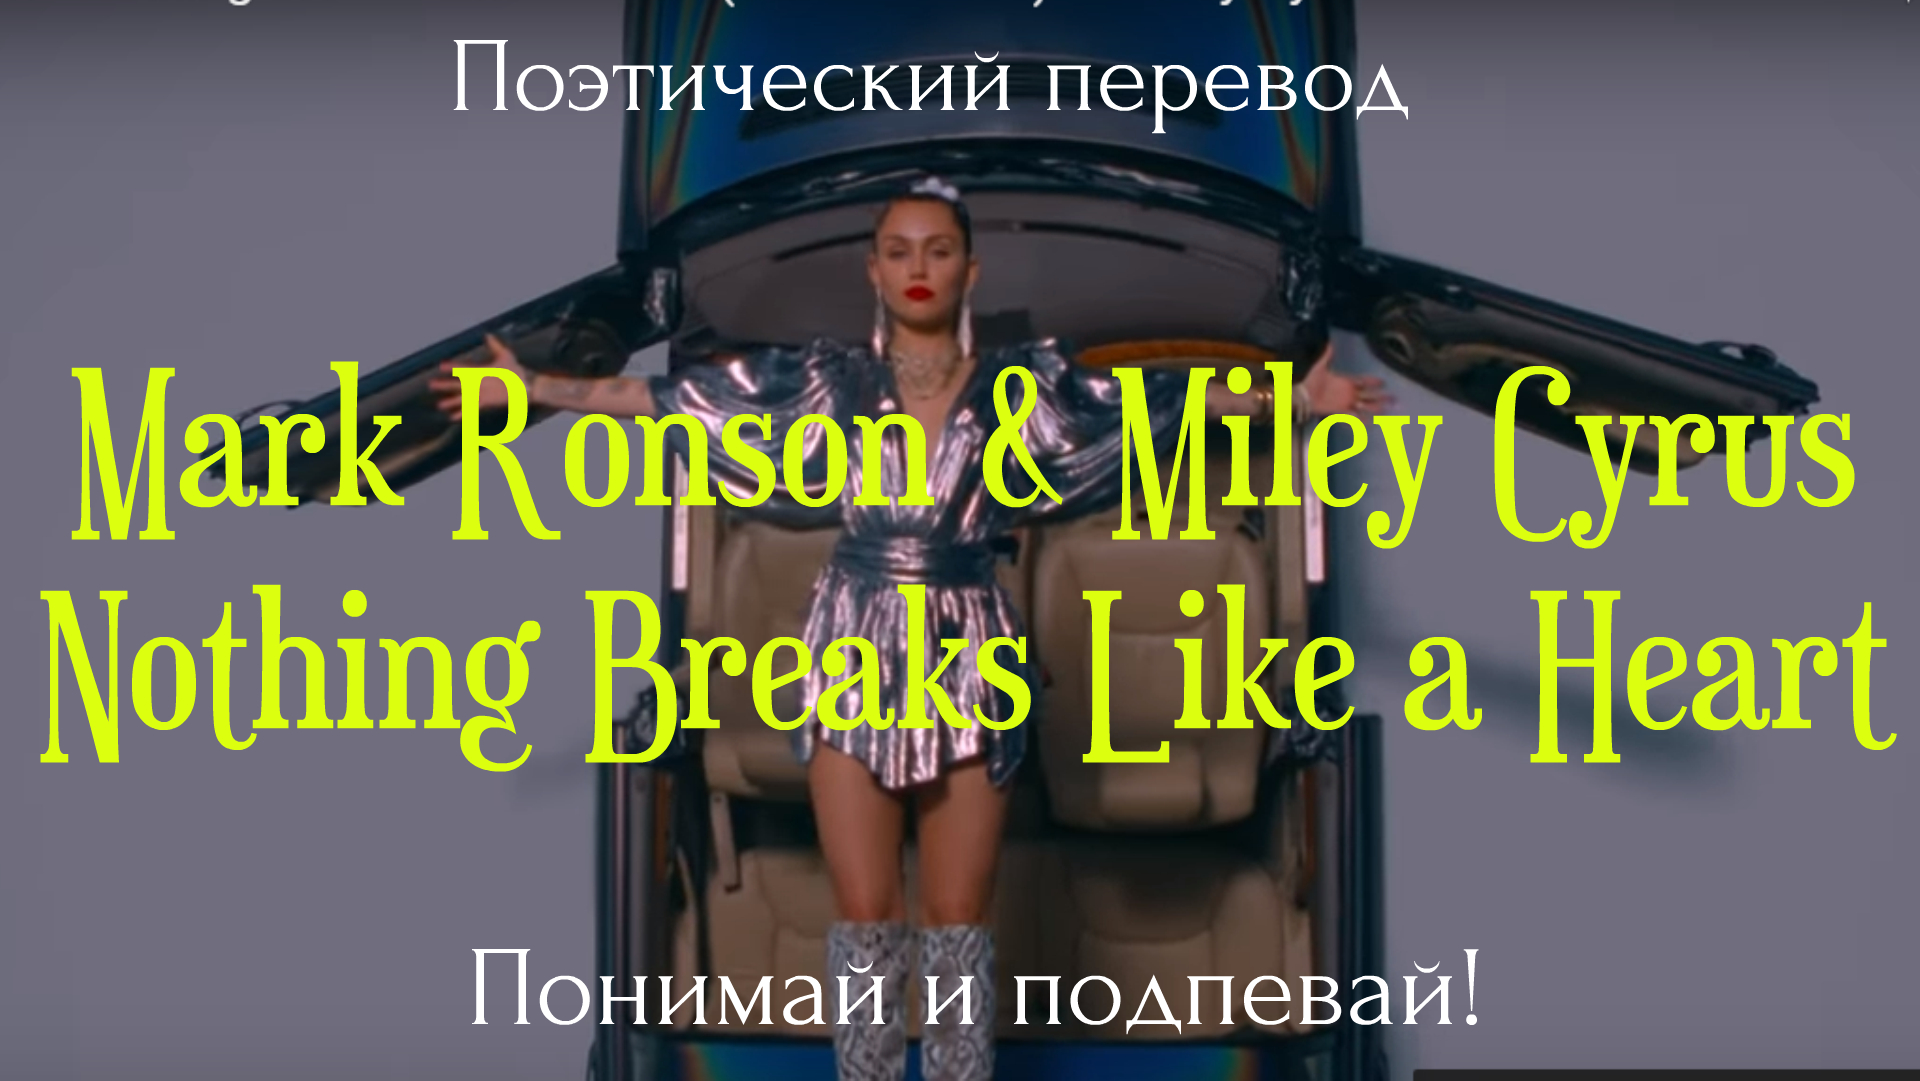 Майли сайрус перевод песни flowers на русский. Mark Ronson Miley Cyrus nothing Breaks like a Heart. Nothing Breaks like a Heart Miley Cyrus текст. Майли Сайрус nothing Breaks  текст. Miley Cyrus nothing Breaks like a Heart перевод.